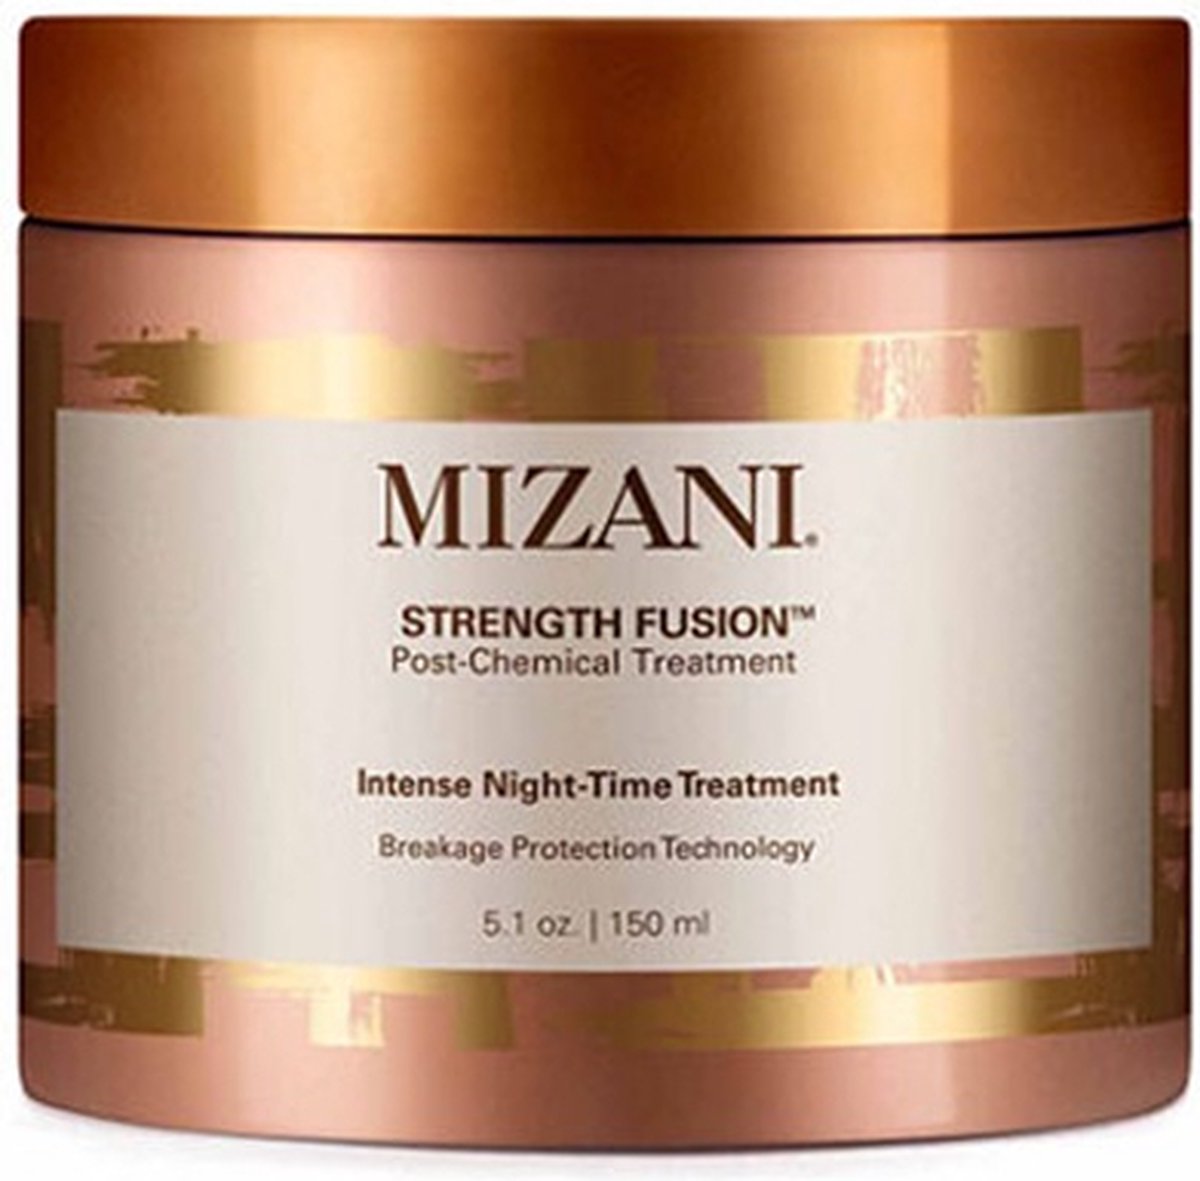 Mizani Strength Fusion - Intense Night-Time Treatment